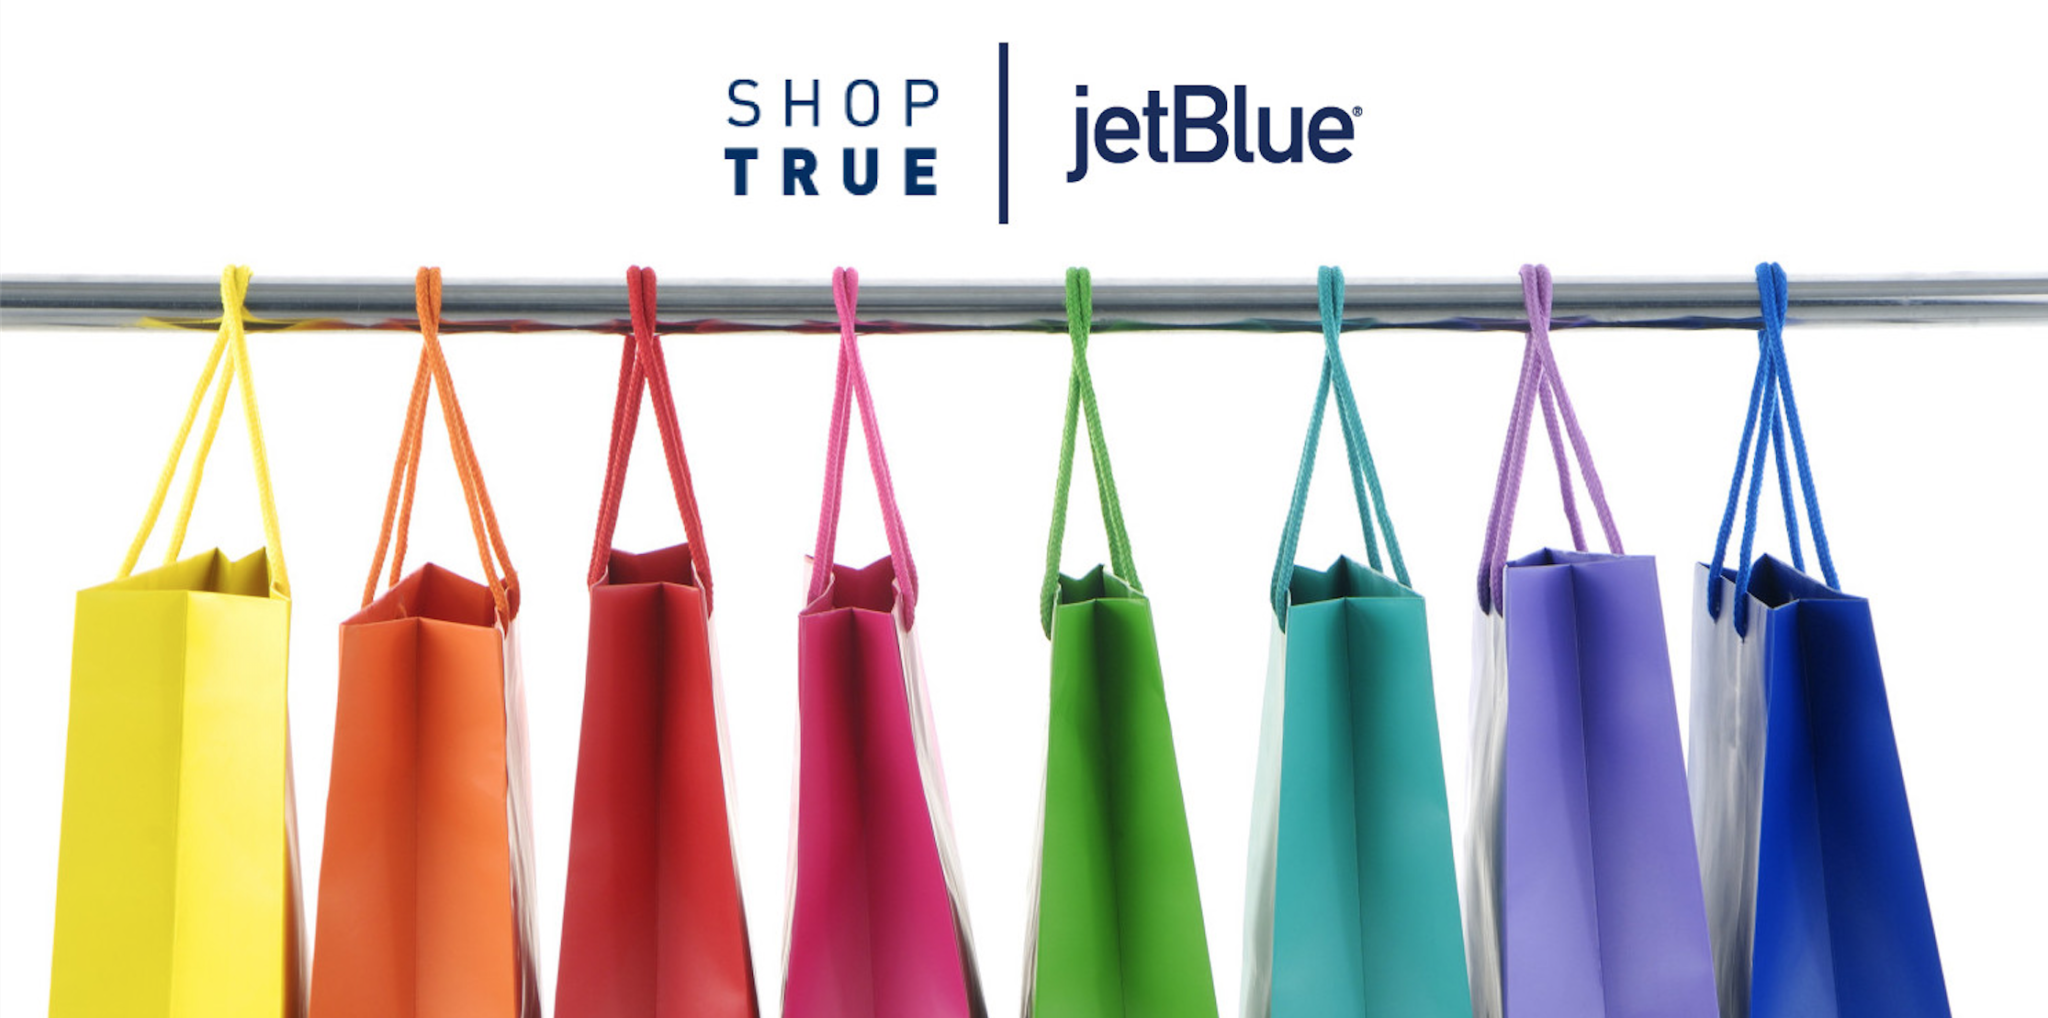 JetBlue ShopTrue Shopping Portal